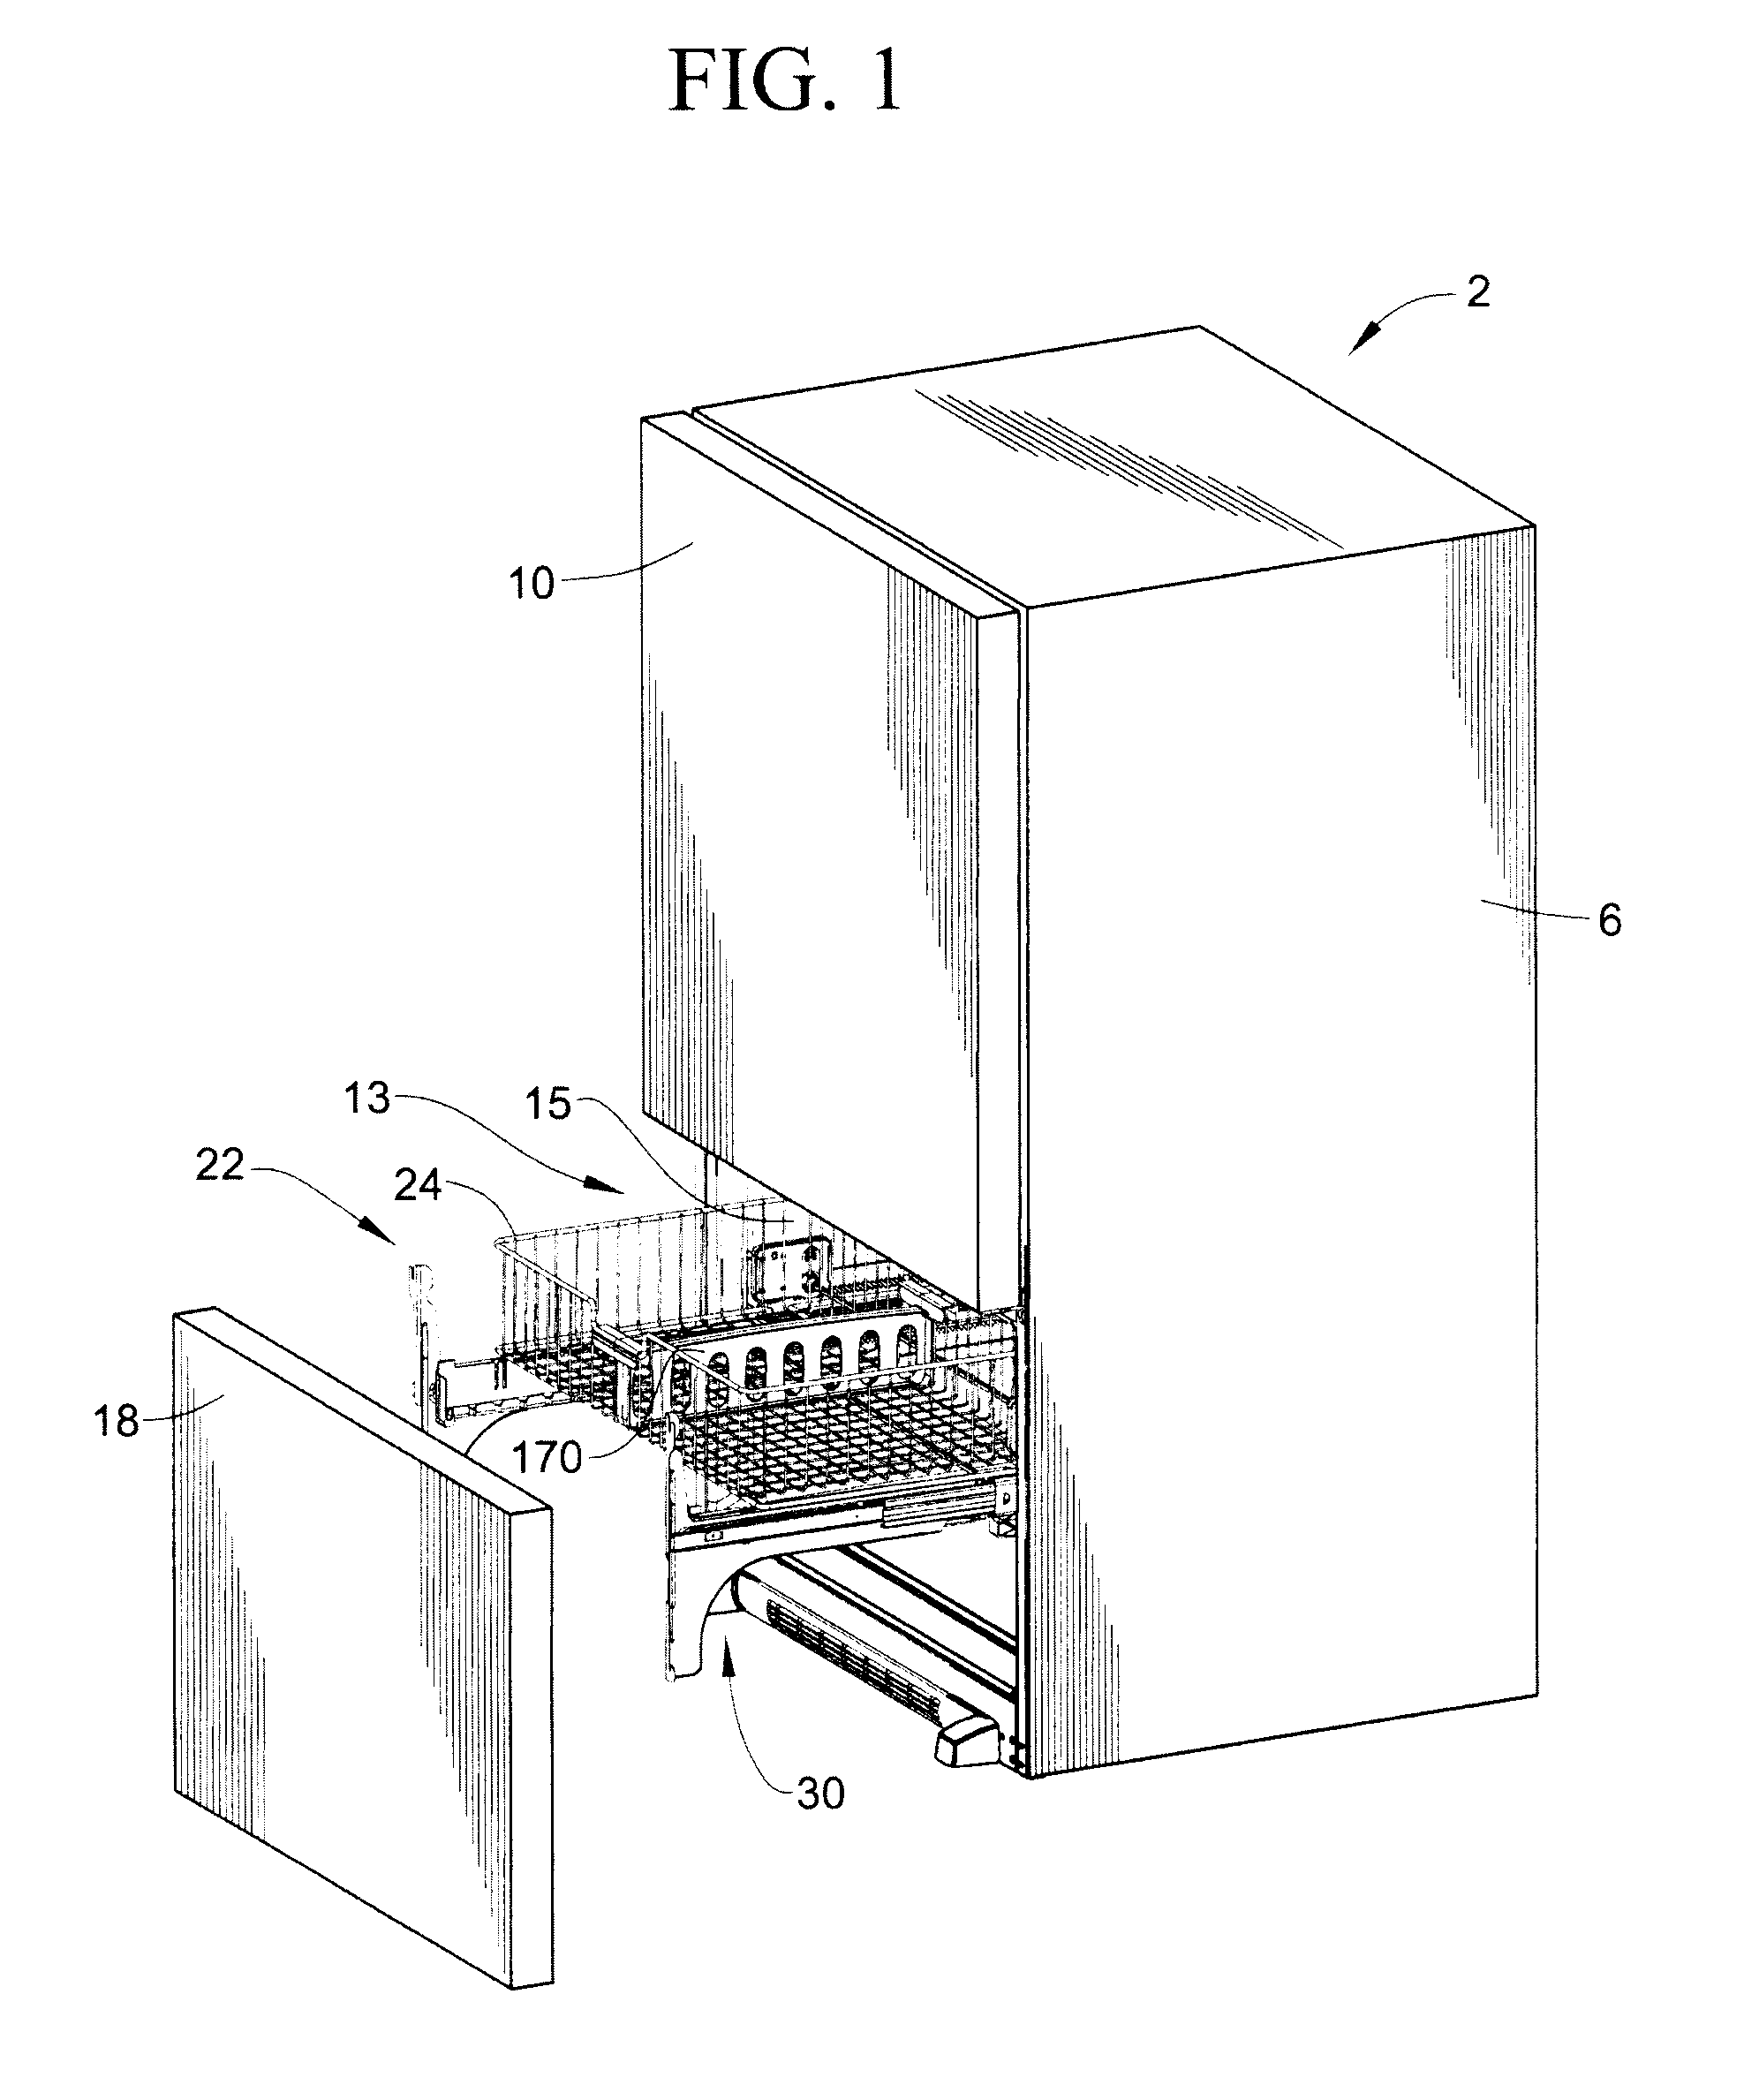 Rack and pinion refrigerator storage system